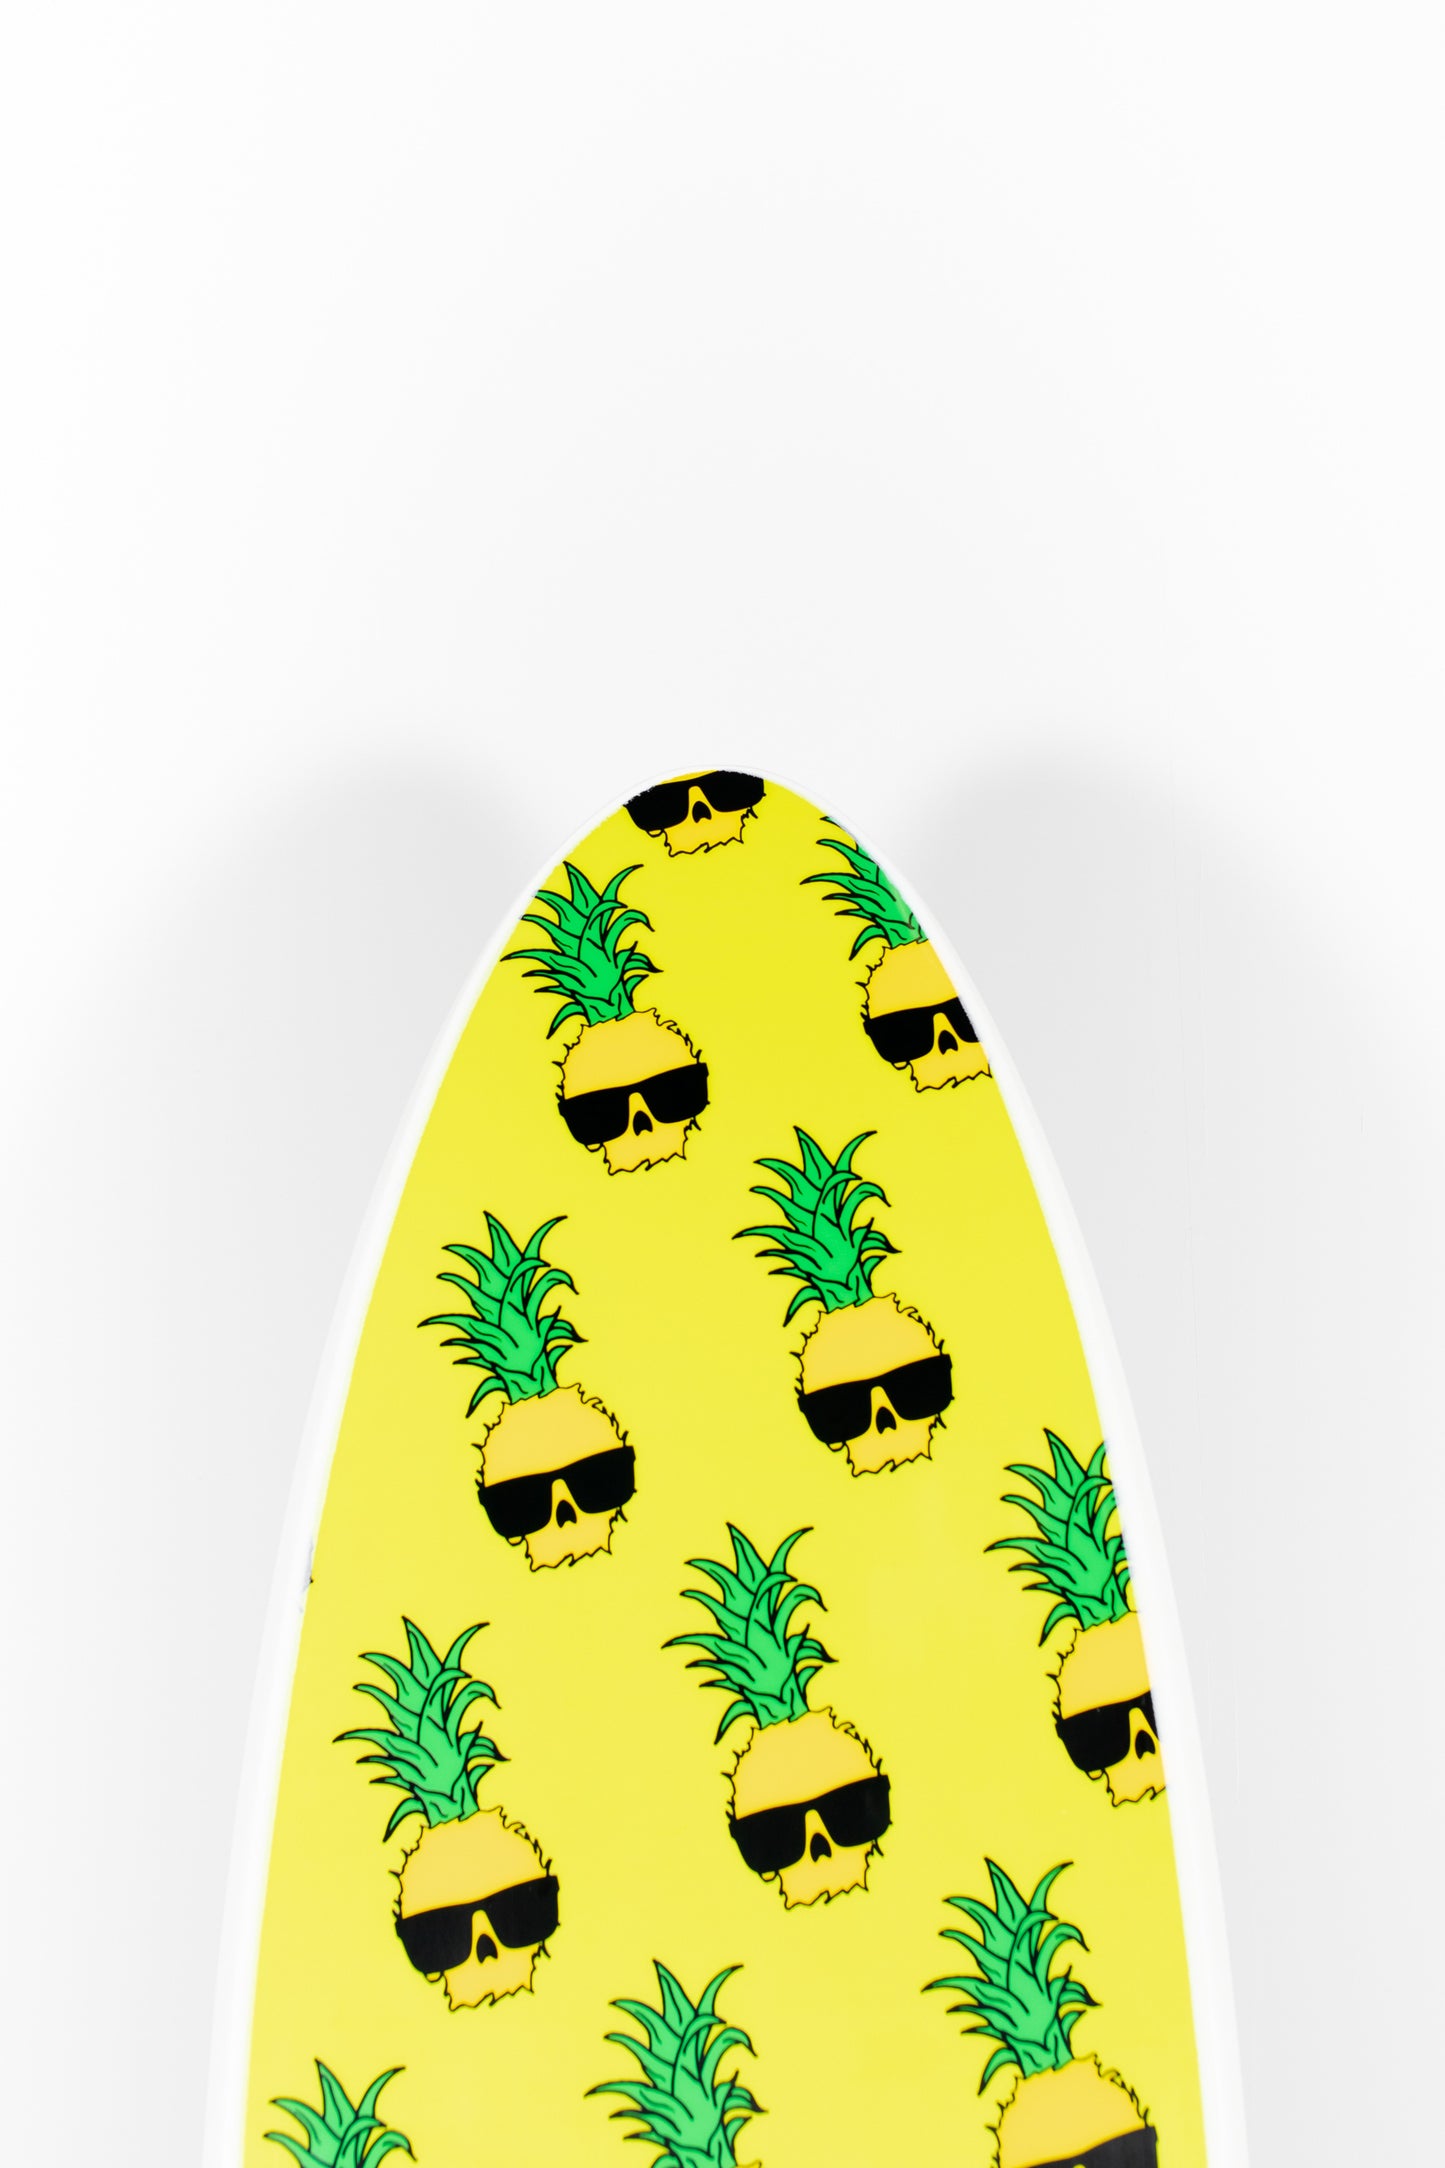 
                  
                    Pukas Surf Shop - Catch Surf - WAVE BANDIT - PERFORMER x BEN GRAVY - 6´6" x 22" x 3,125" x 55L.
                  
                